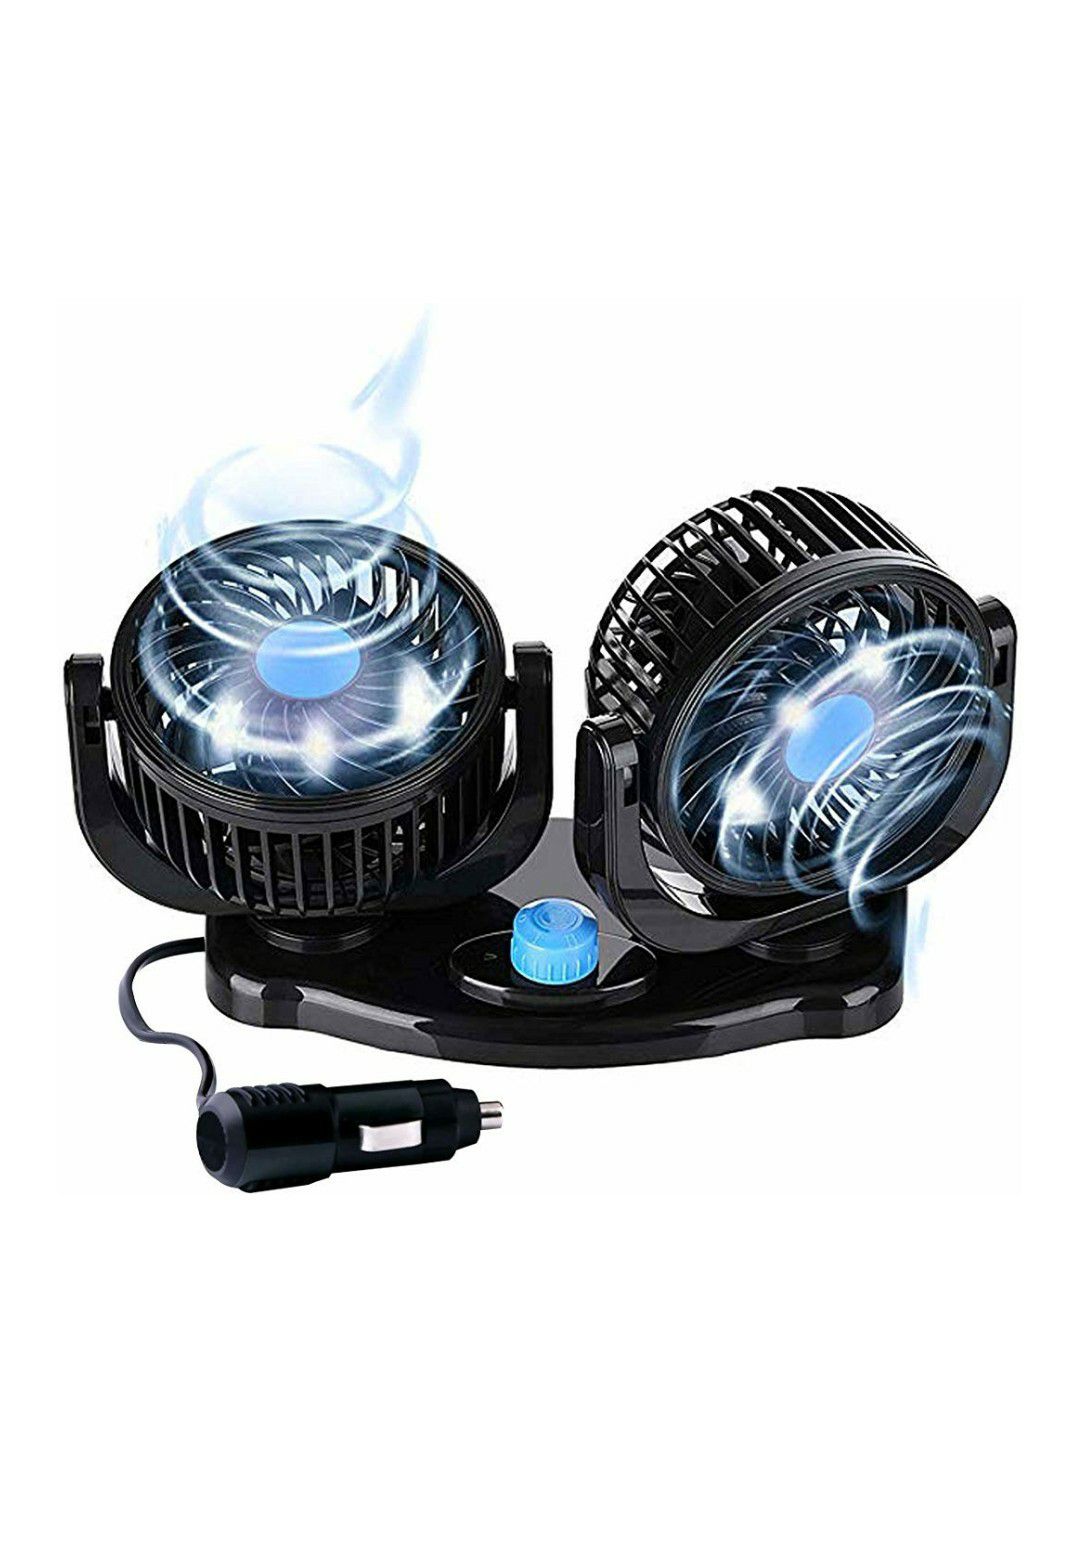 (W46) MAXTUF 12V Car Fan, Dual Head Auto Cooling Air Fan 2 Speed Cooling Air Circulator Low Noise 360 Degree Rotatable